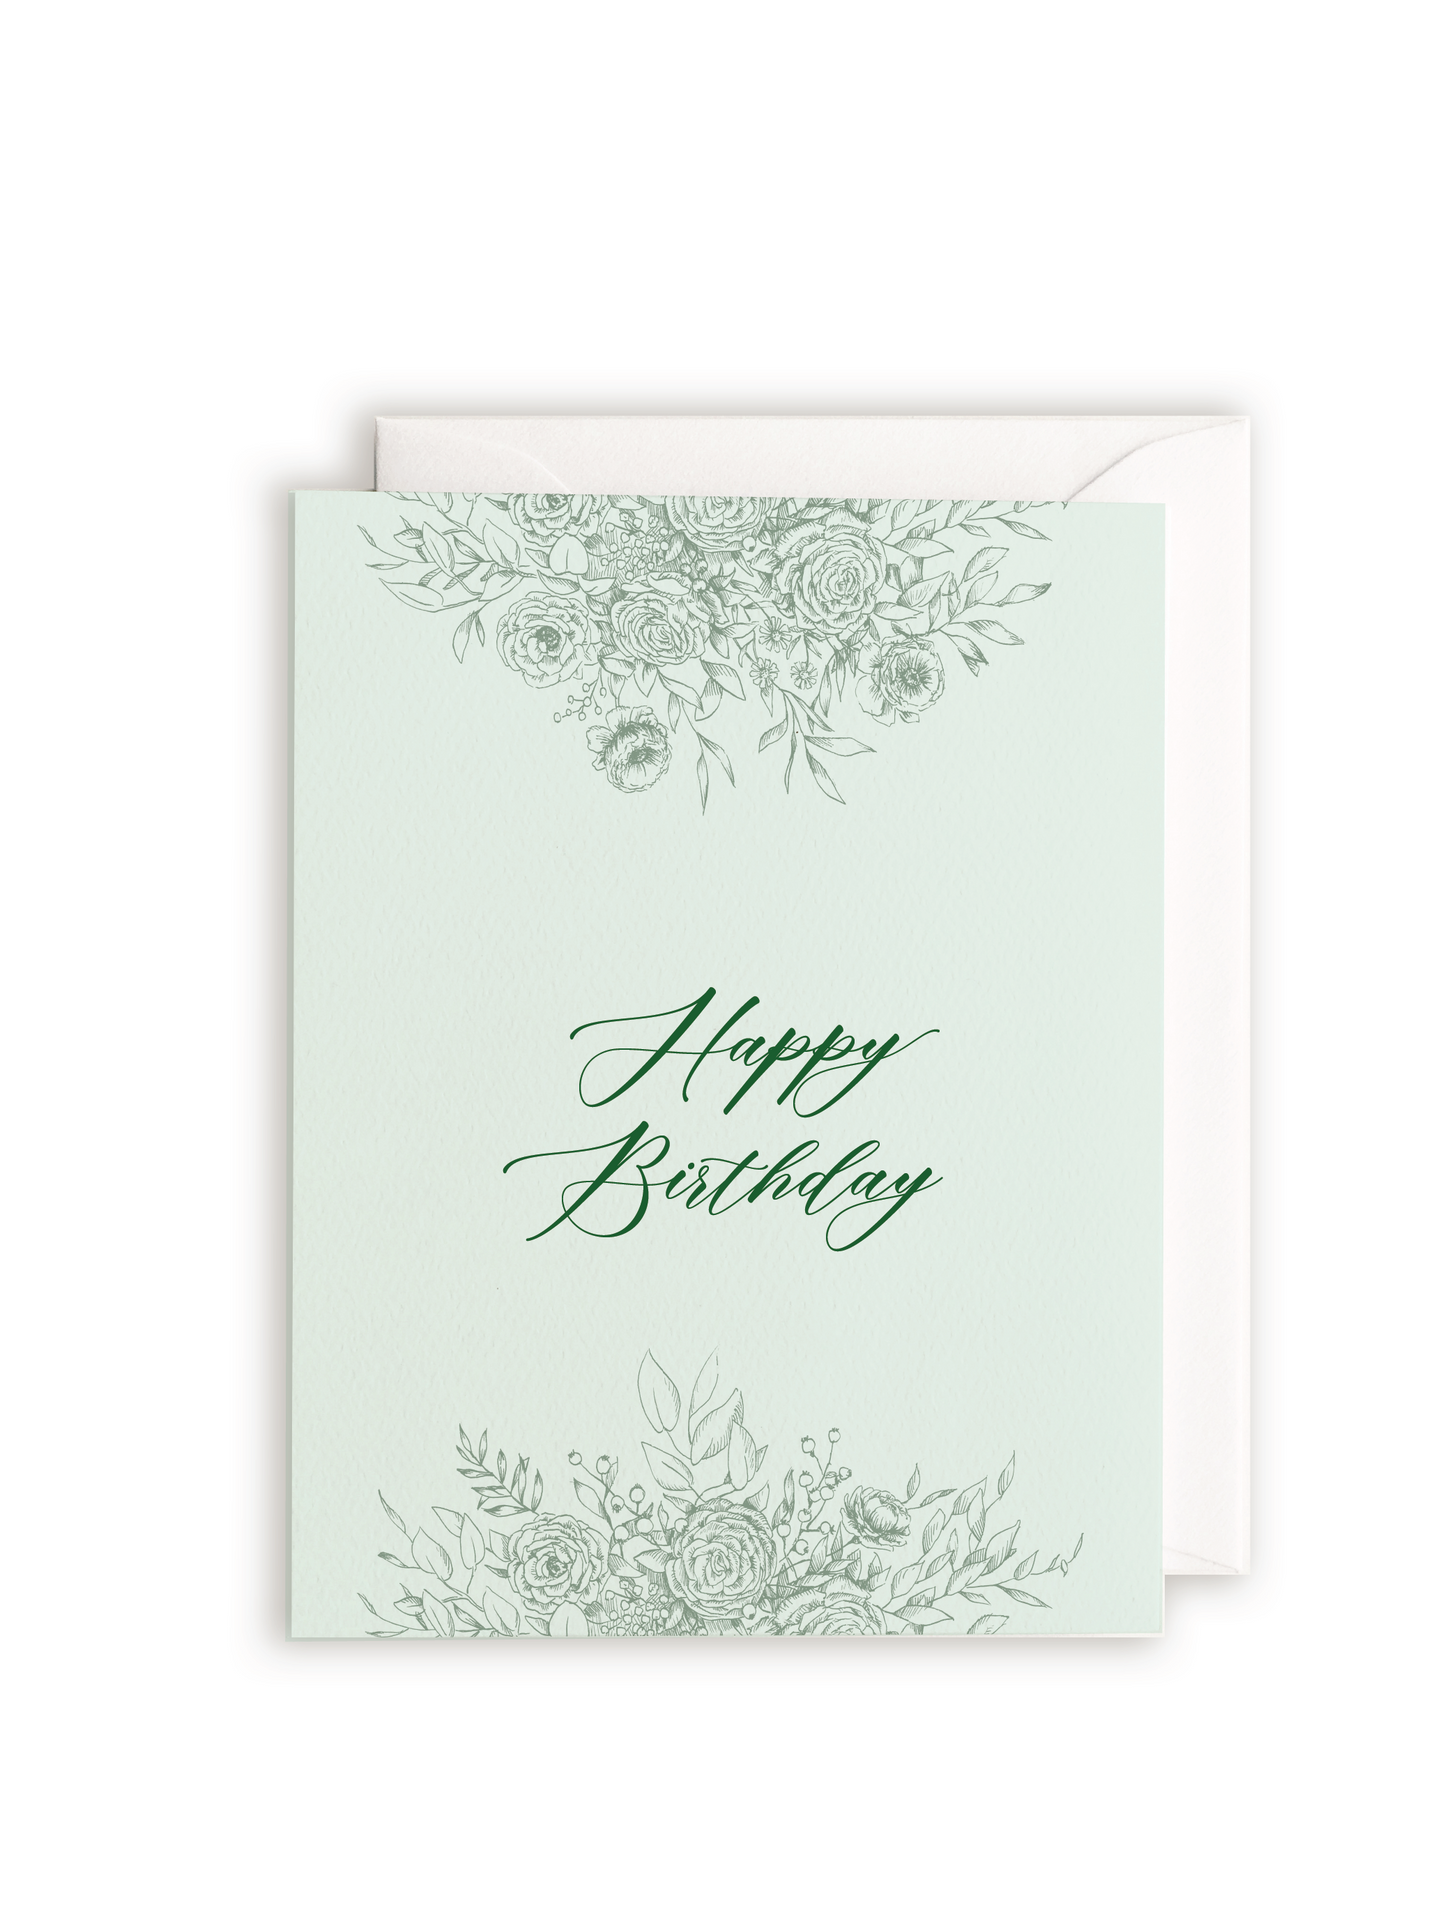 Happy Birthday Letterpress Greeting Card - Rust Belt Love Paperie